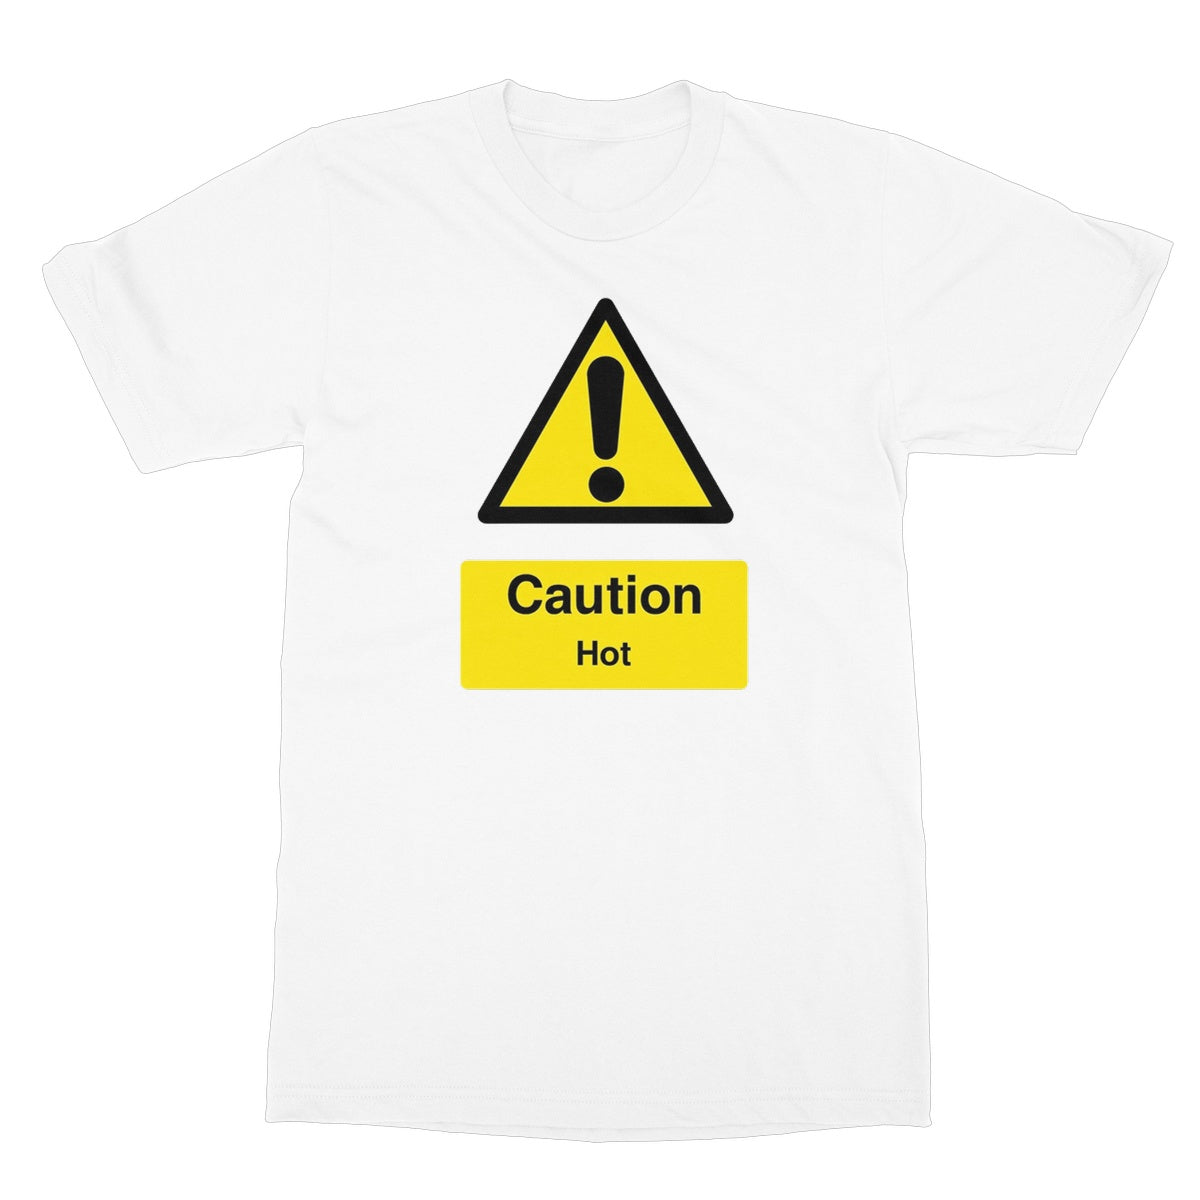 caution-hot t shirt white